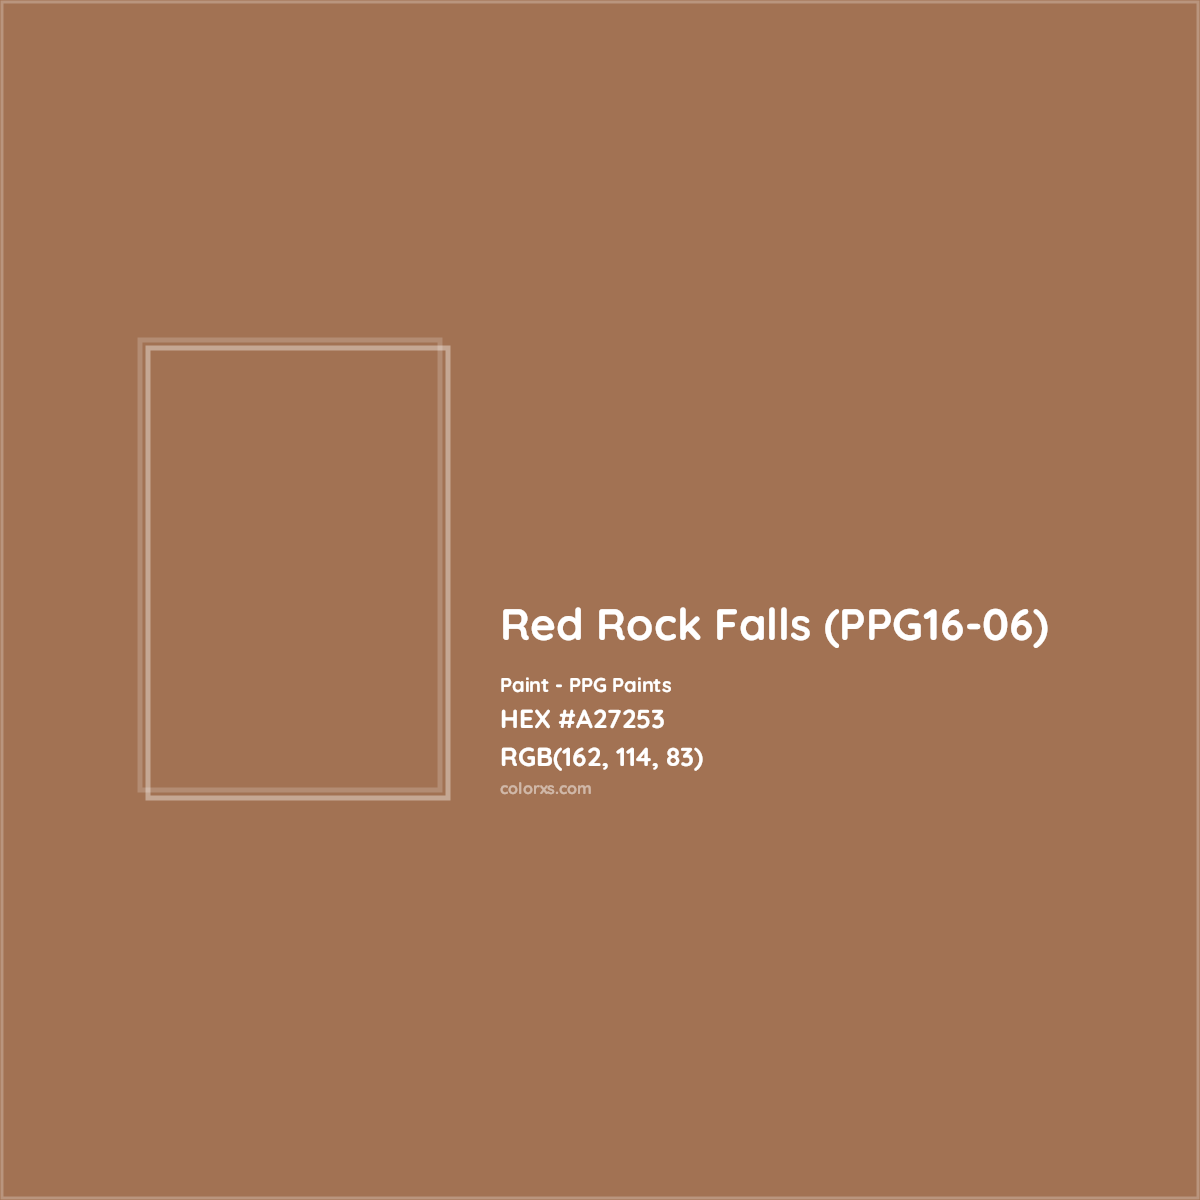 HEX #A27253 Red Rock Falls (PPG16-06) Paint PPG Paints - Color Code